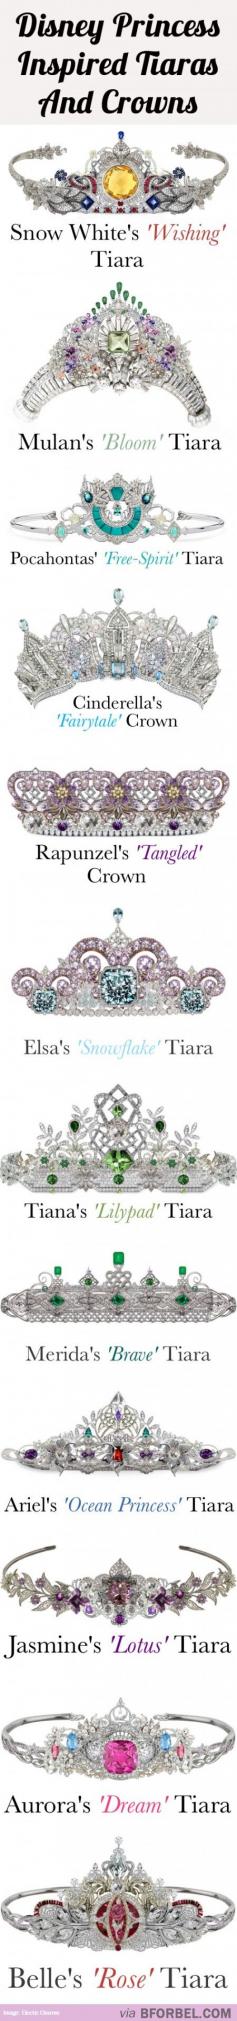 12 Disney Princess Tiaras And Crowns…All Set With Beautiful Diamonds, Gems  Precious Stones. -ShazB. Cool!